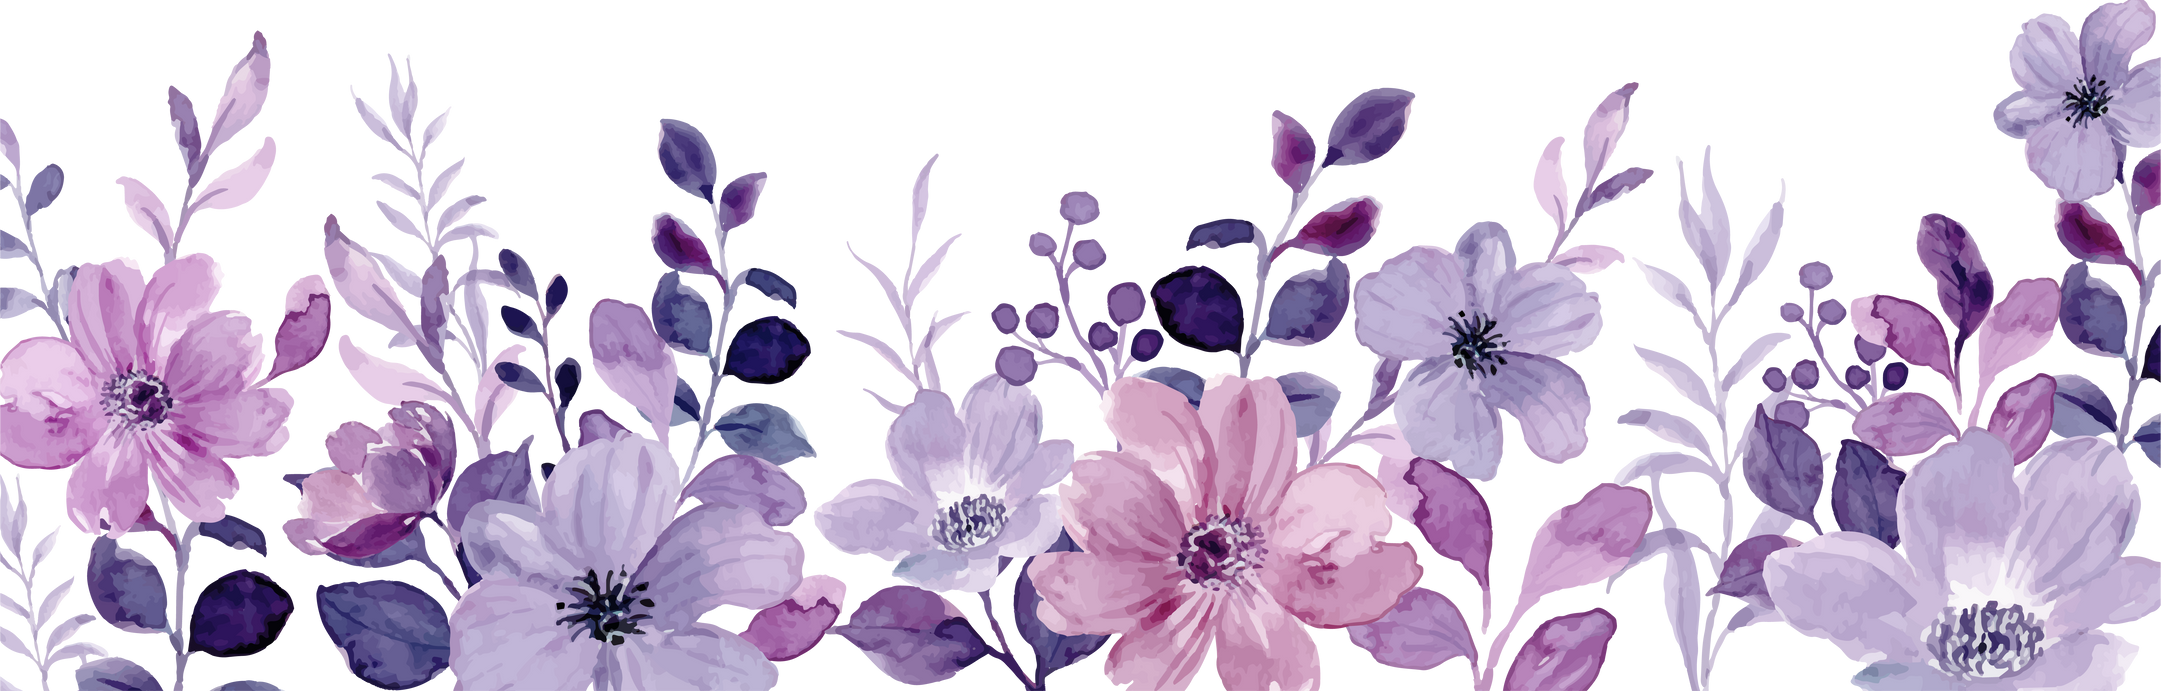 Watercolor purple flower border